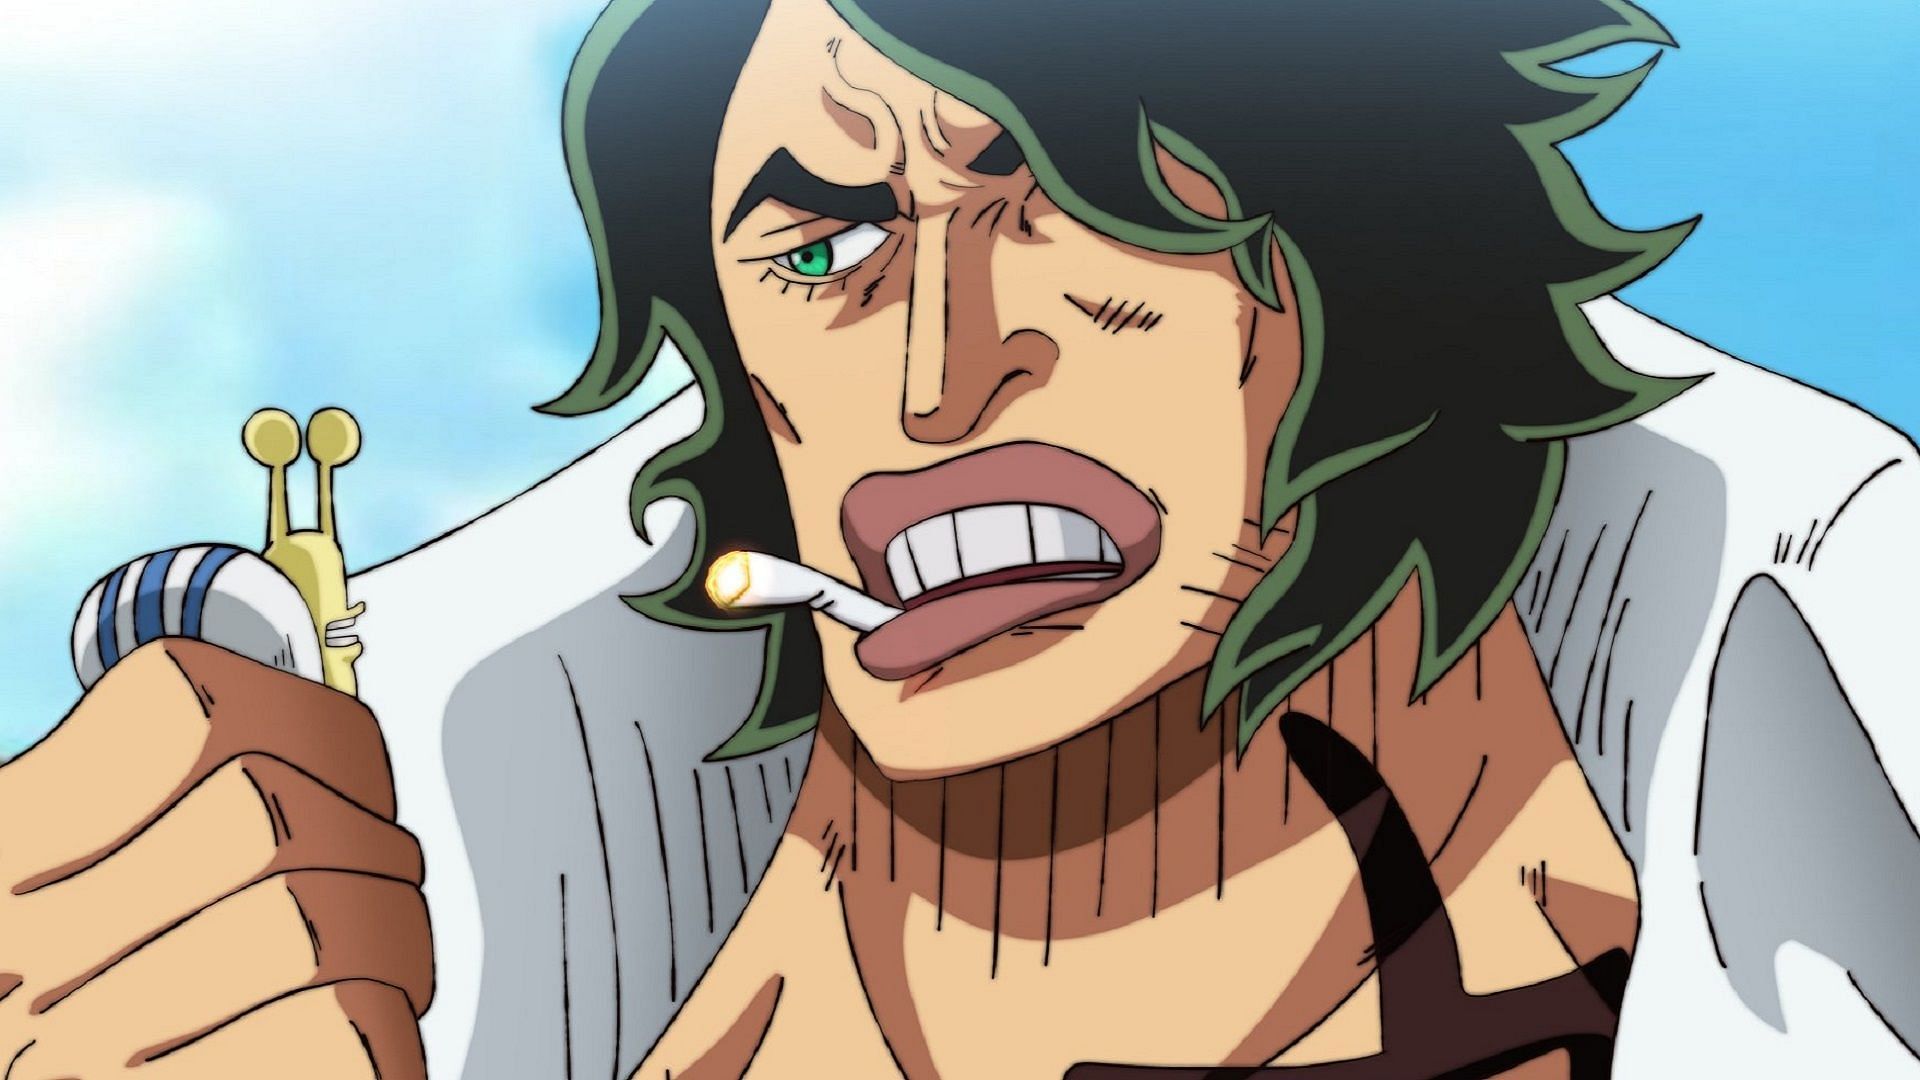 Ryogyoku as seen in One Piece (Image via Eiichiro Oda/Shueisha, One Piece)